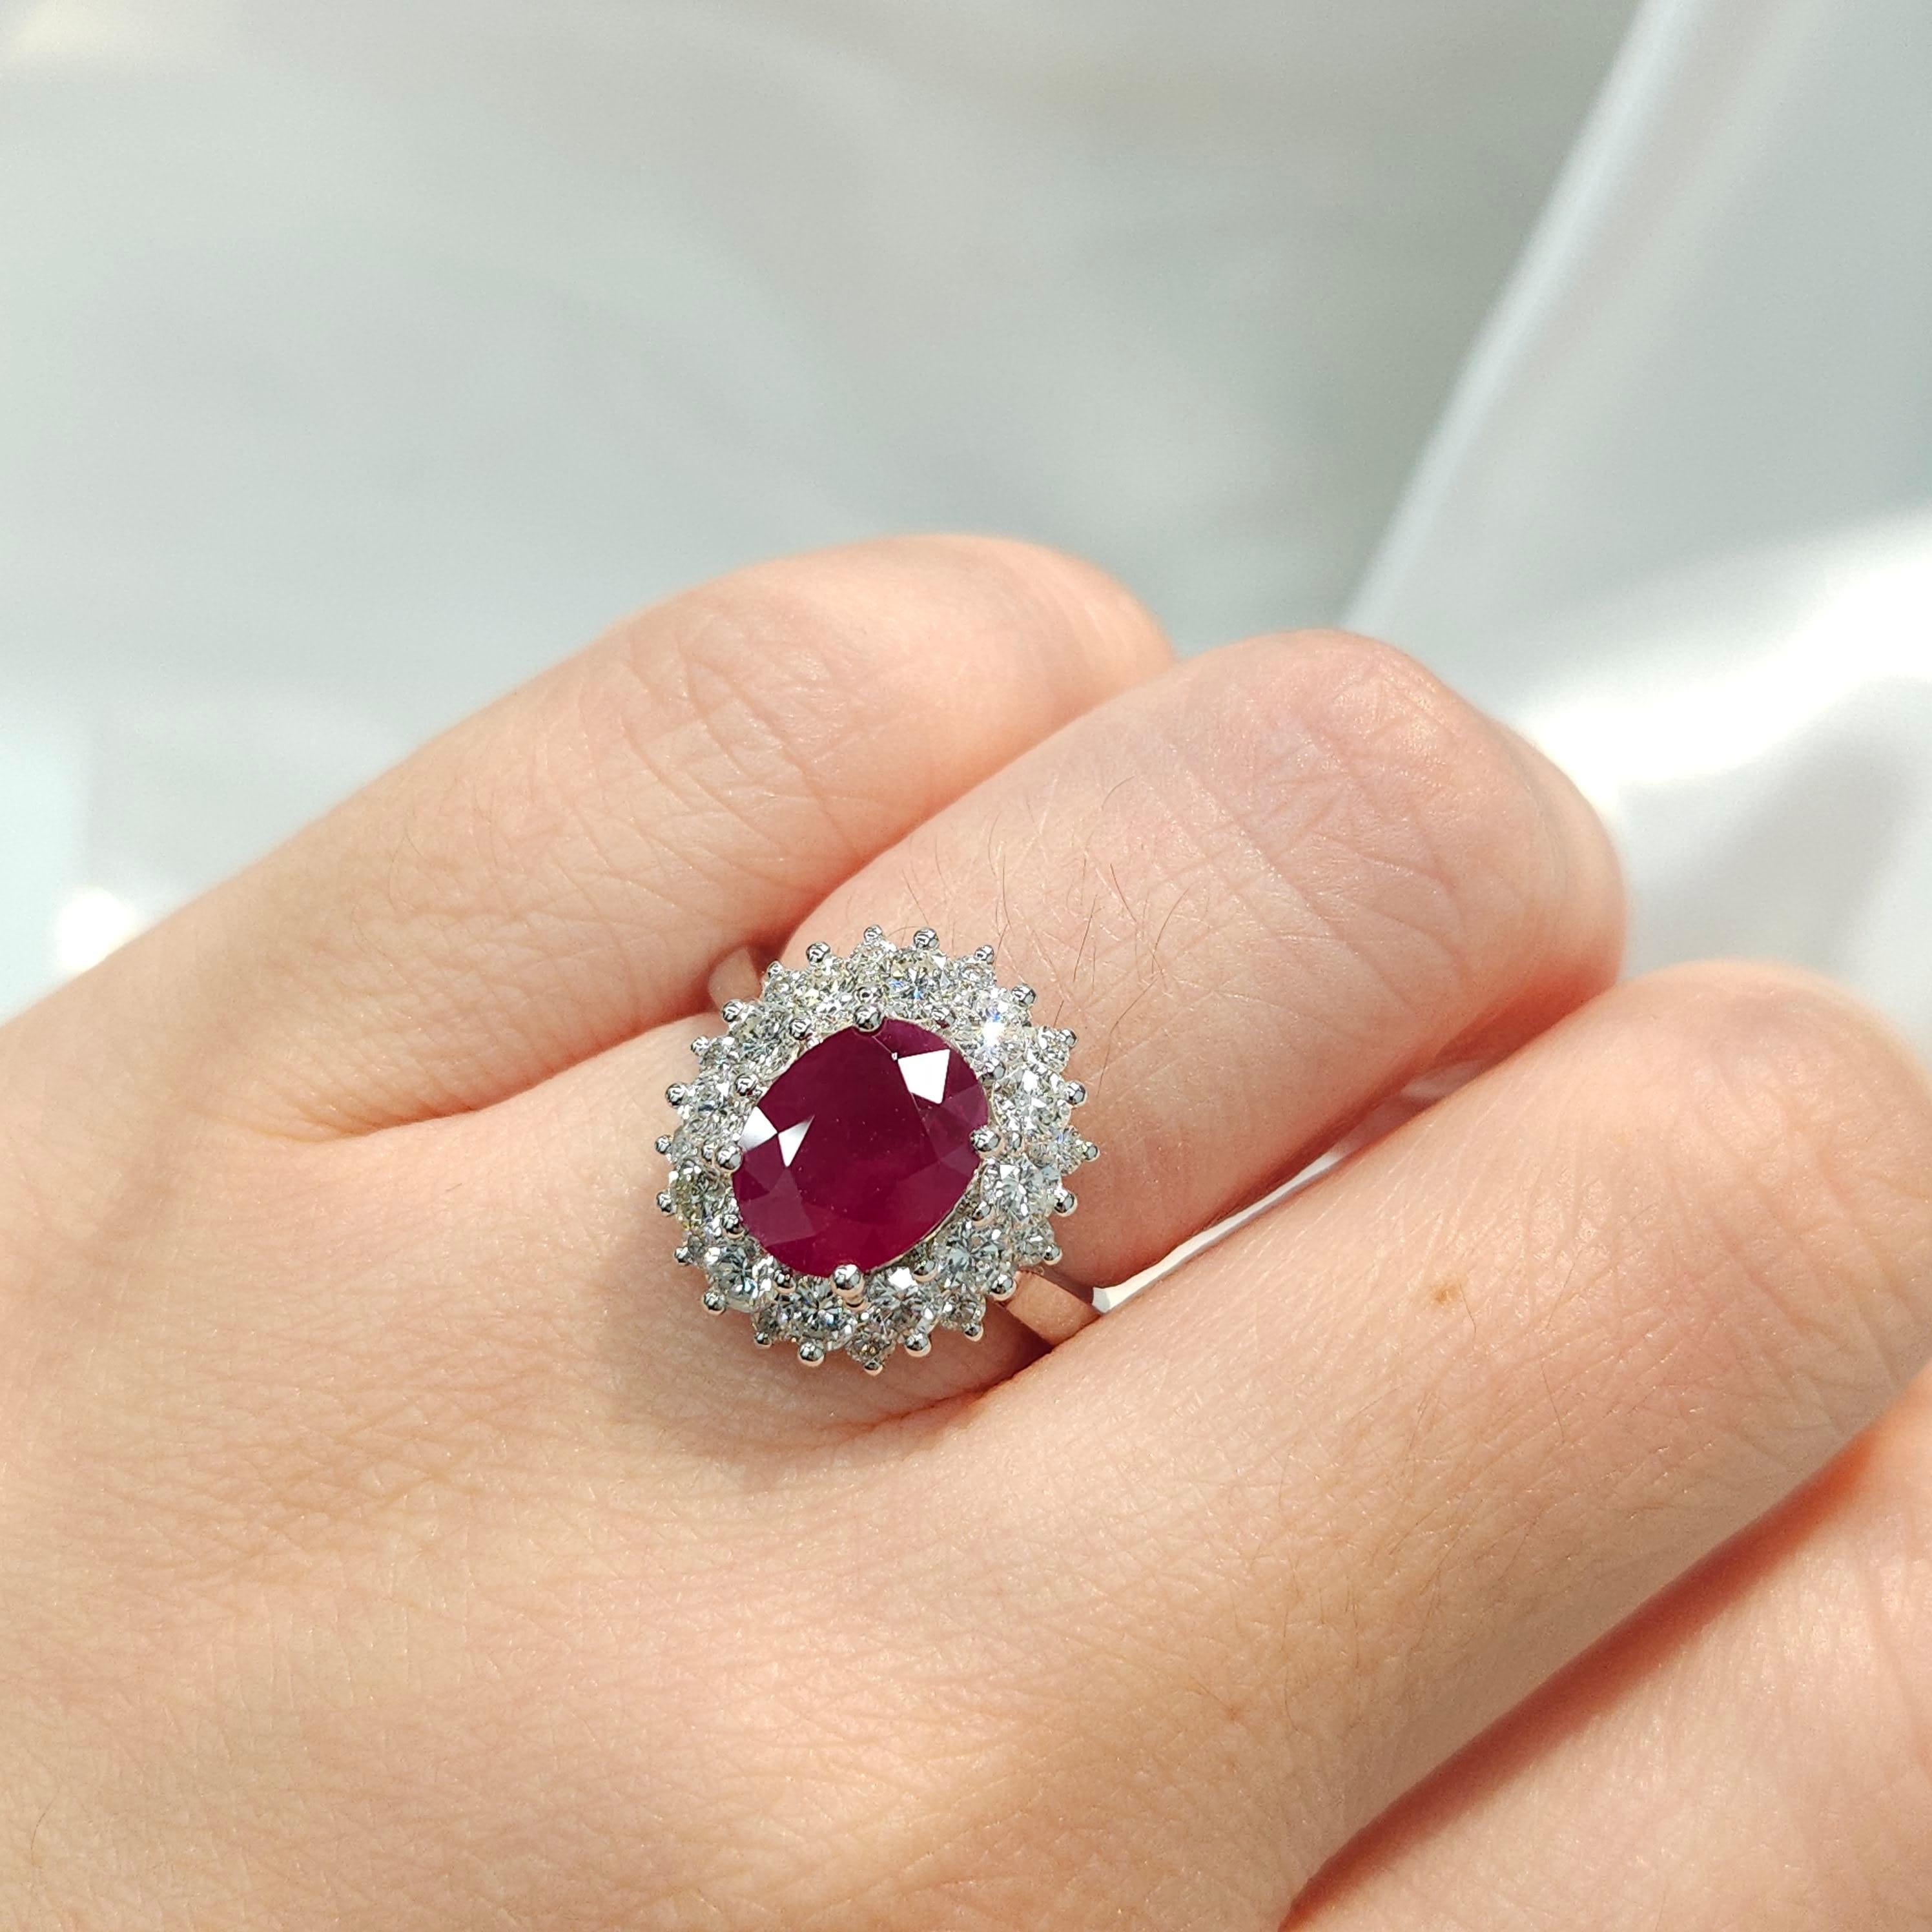 IGI Certified 2.40 Carat Burma Ruby & 1.41 Carat Diamond Ring in 18K White Gold For Sale 2